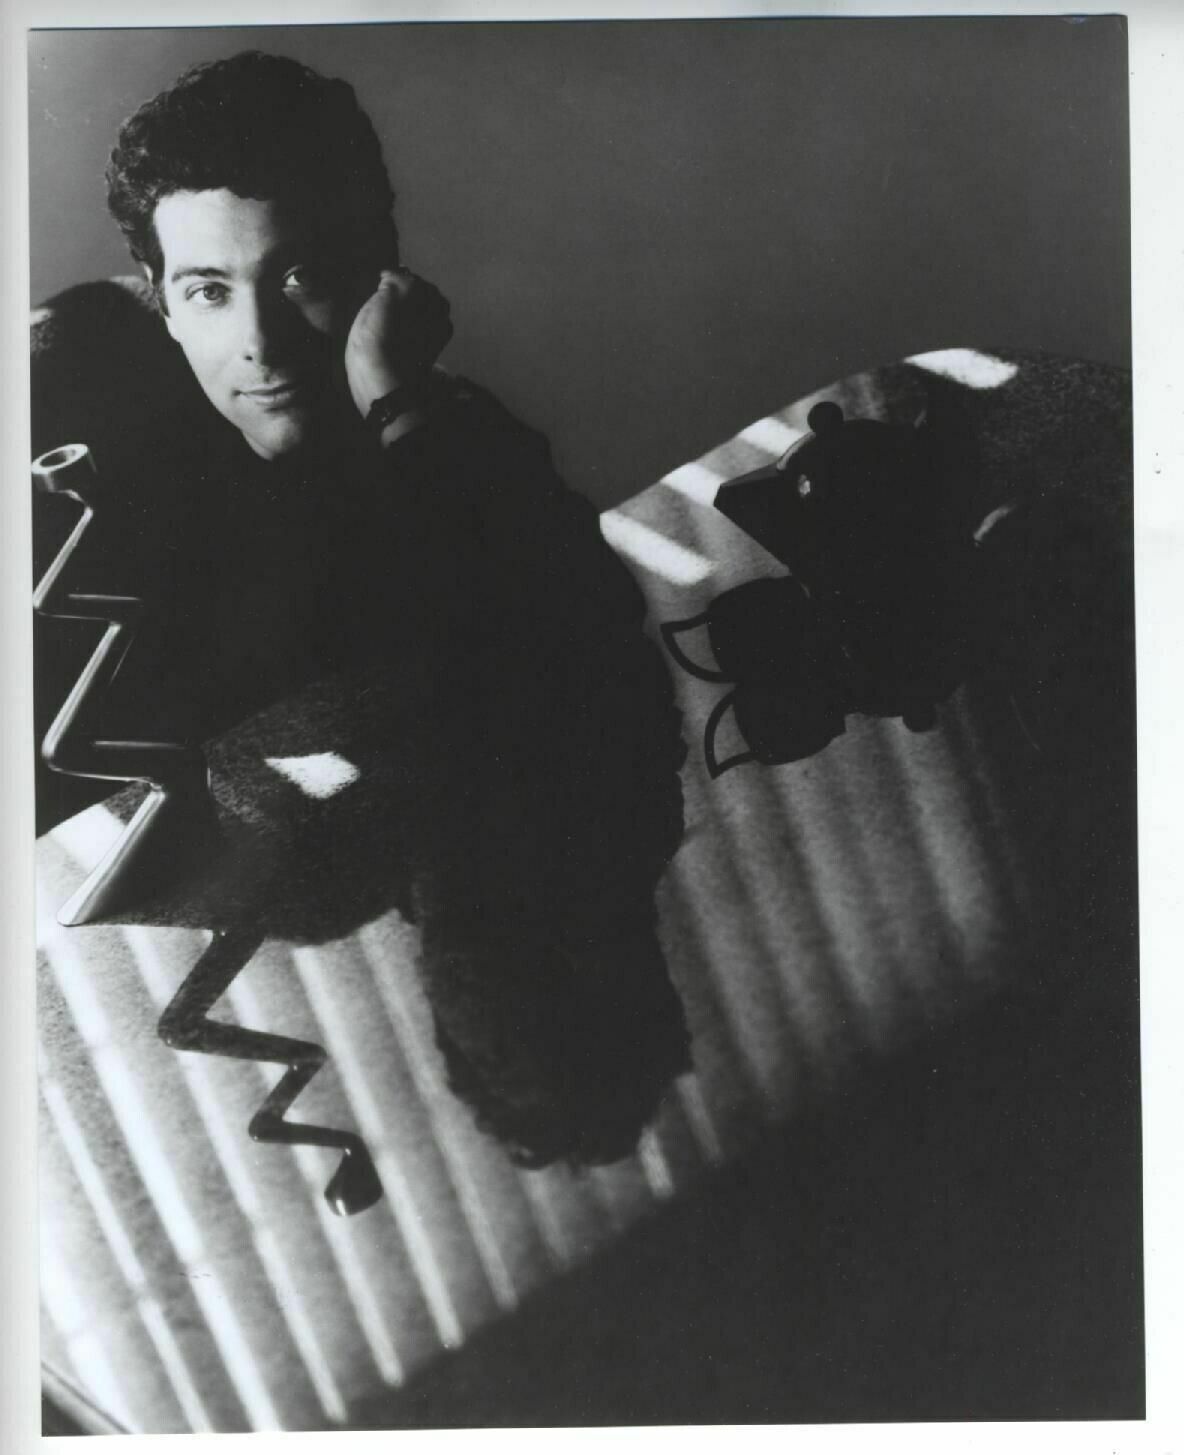 1988 ORIGINAL PHOTO BY GREG GORMAN MUSICIAN PIANIST MICHAEL FEINSTEIN FANTASTIC